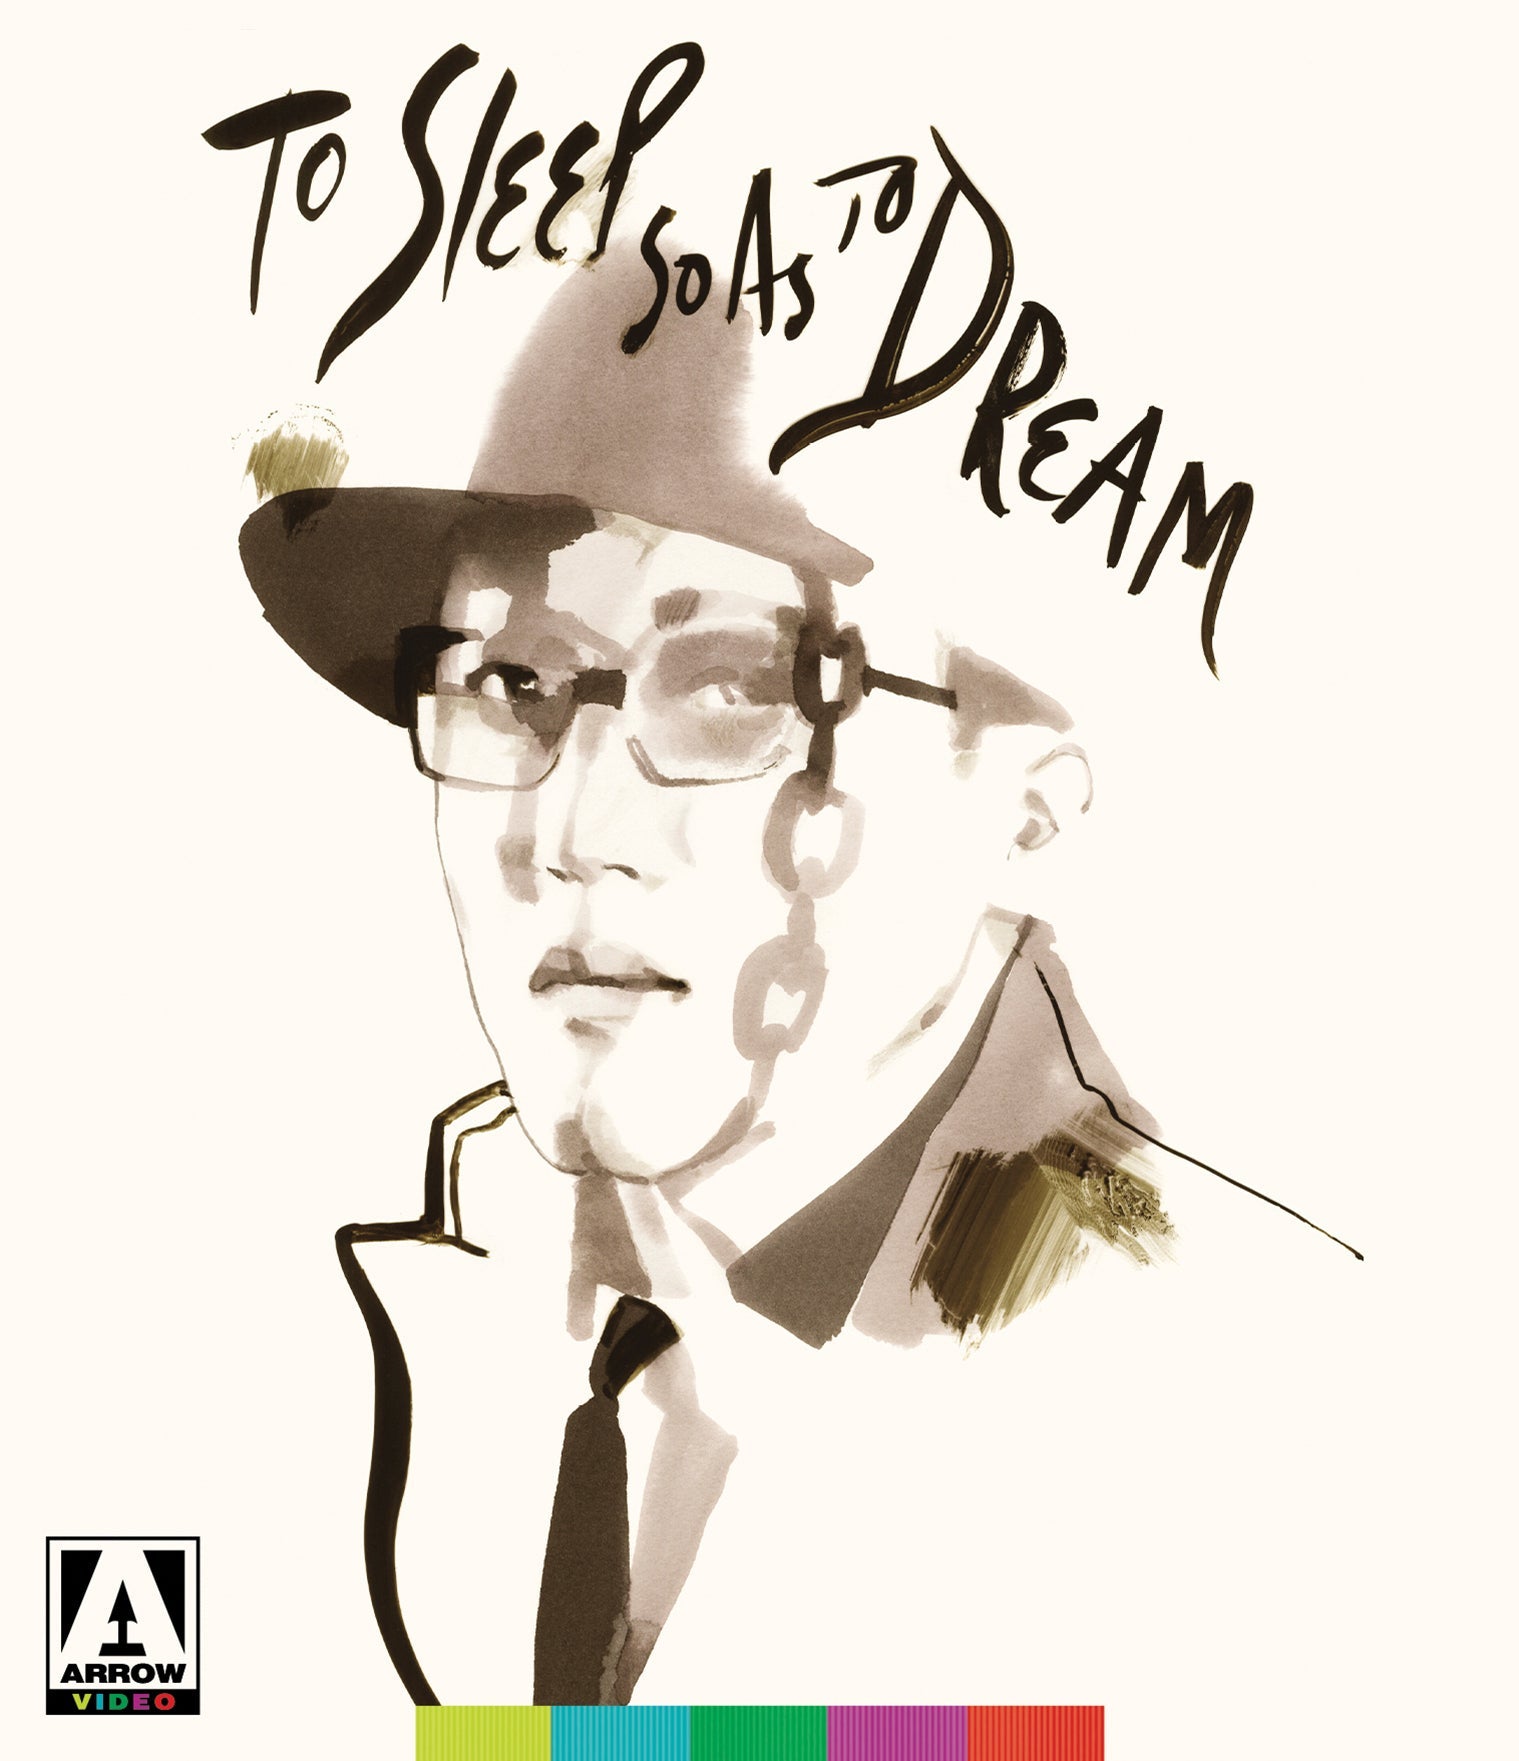 To Sleep So As Dream Blu-Ray [Pre-Order] Blu-Ray